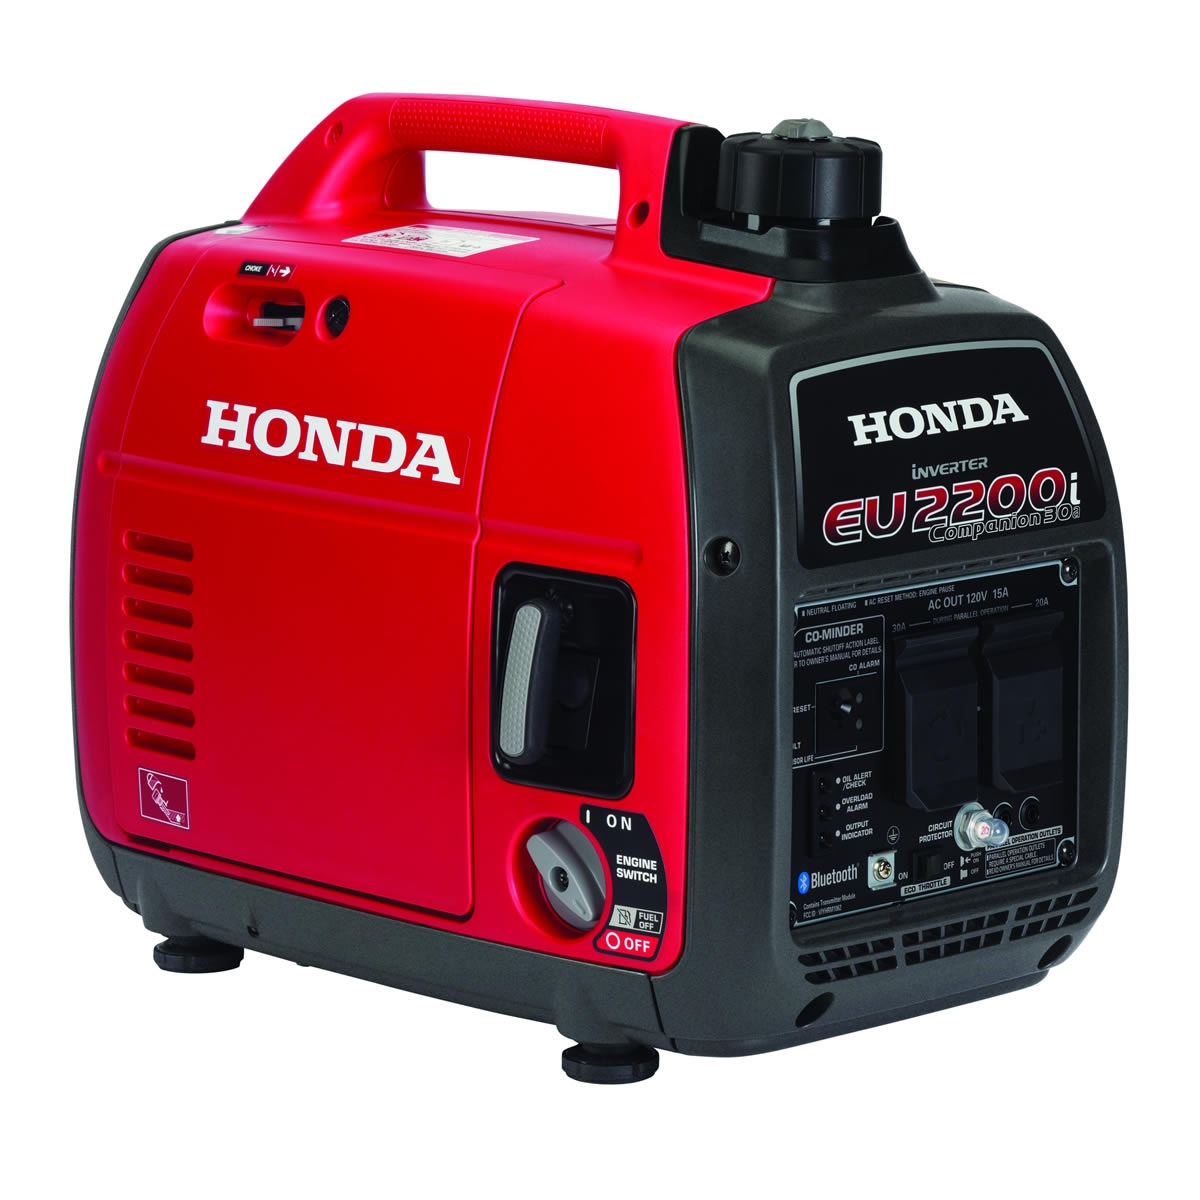 Honda marine boat generator